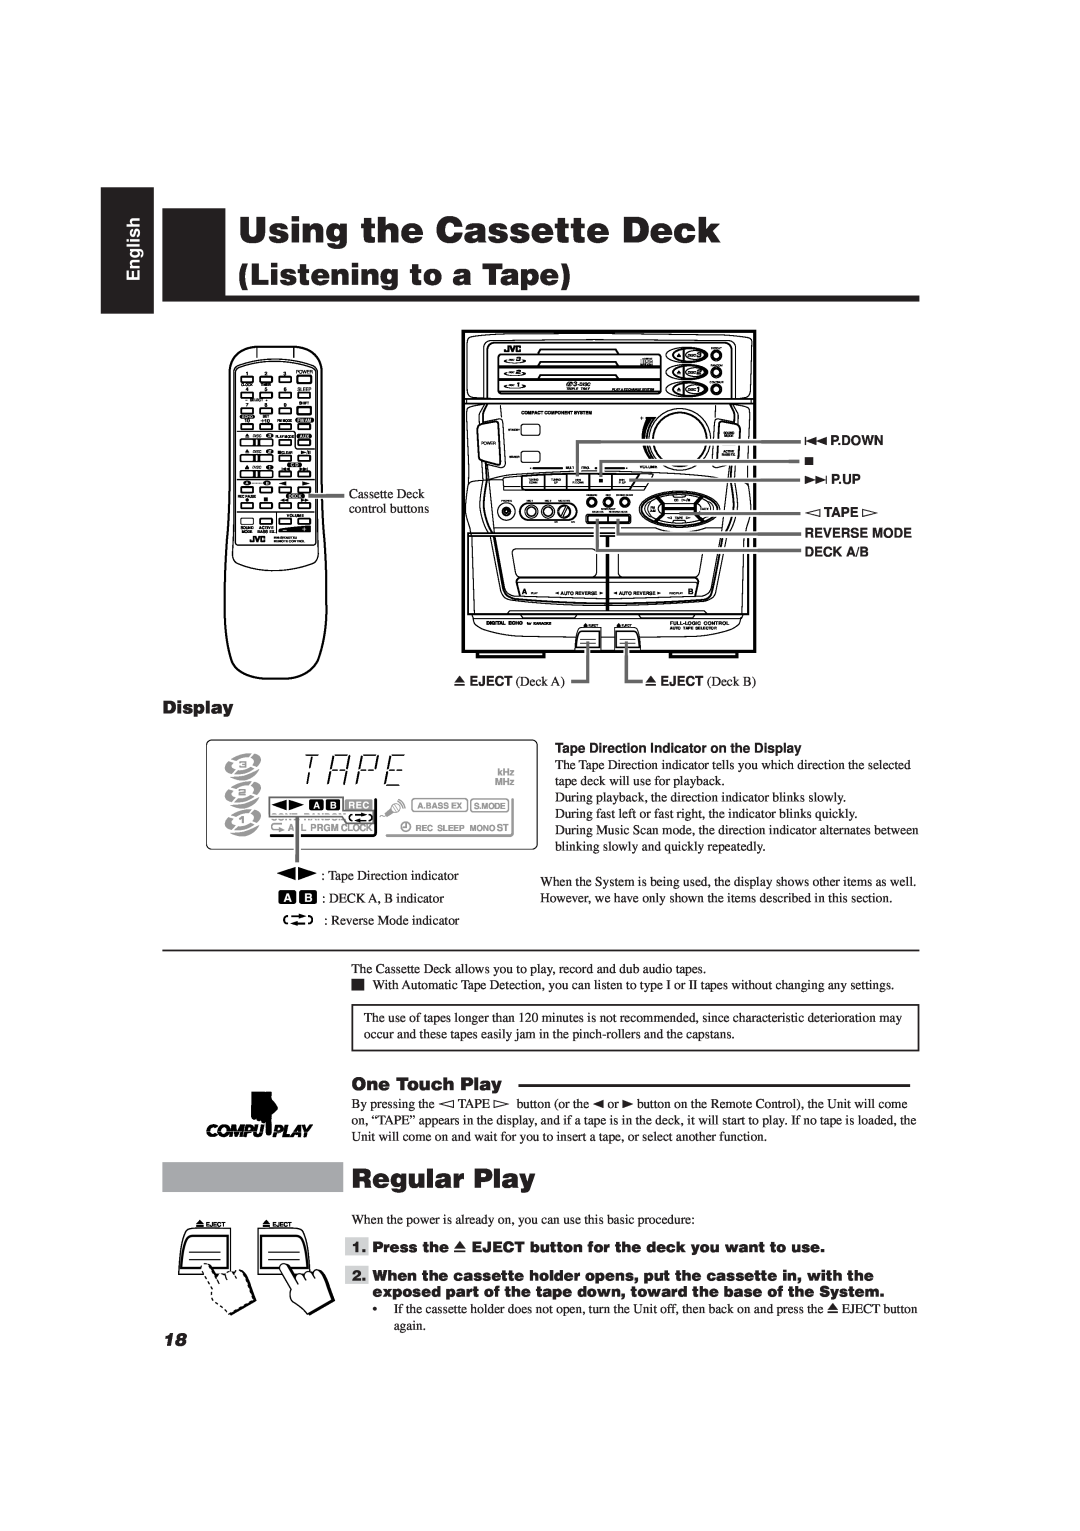 JVC MX-D401T, CA-D501T manual Using the Cassette Deck, Listening to a Tape, Regular Play, English 